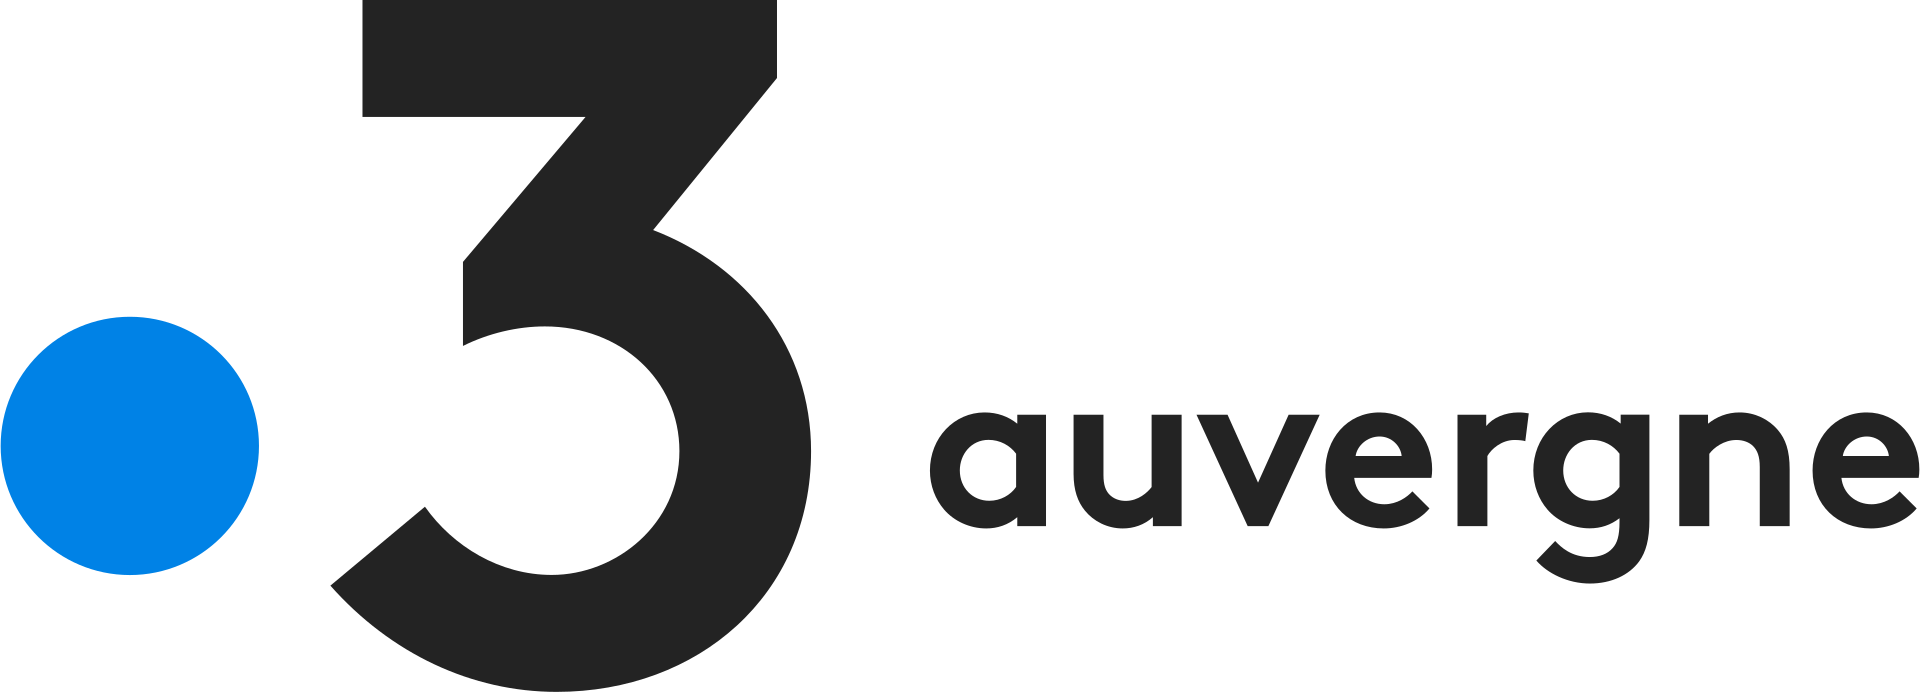 France 3 Auvergne Logo 2018 wikipdia